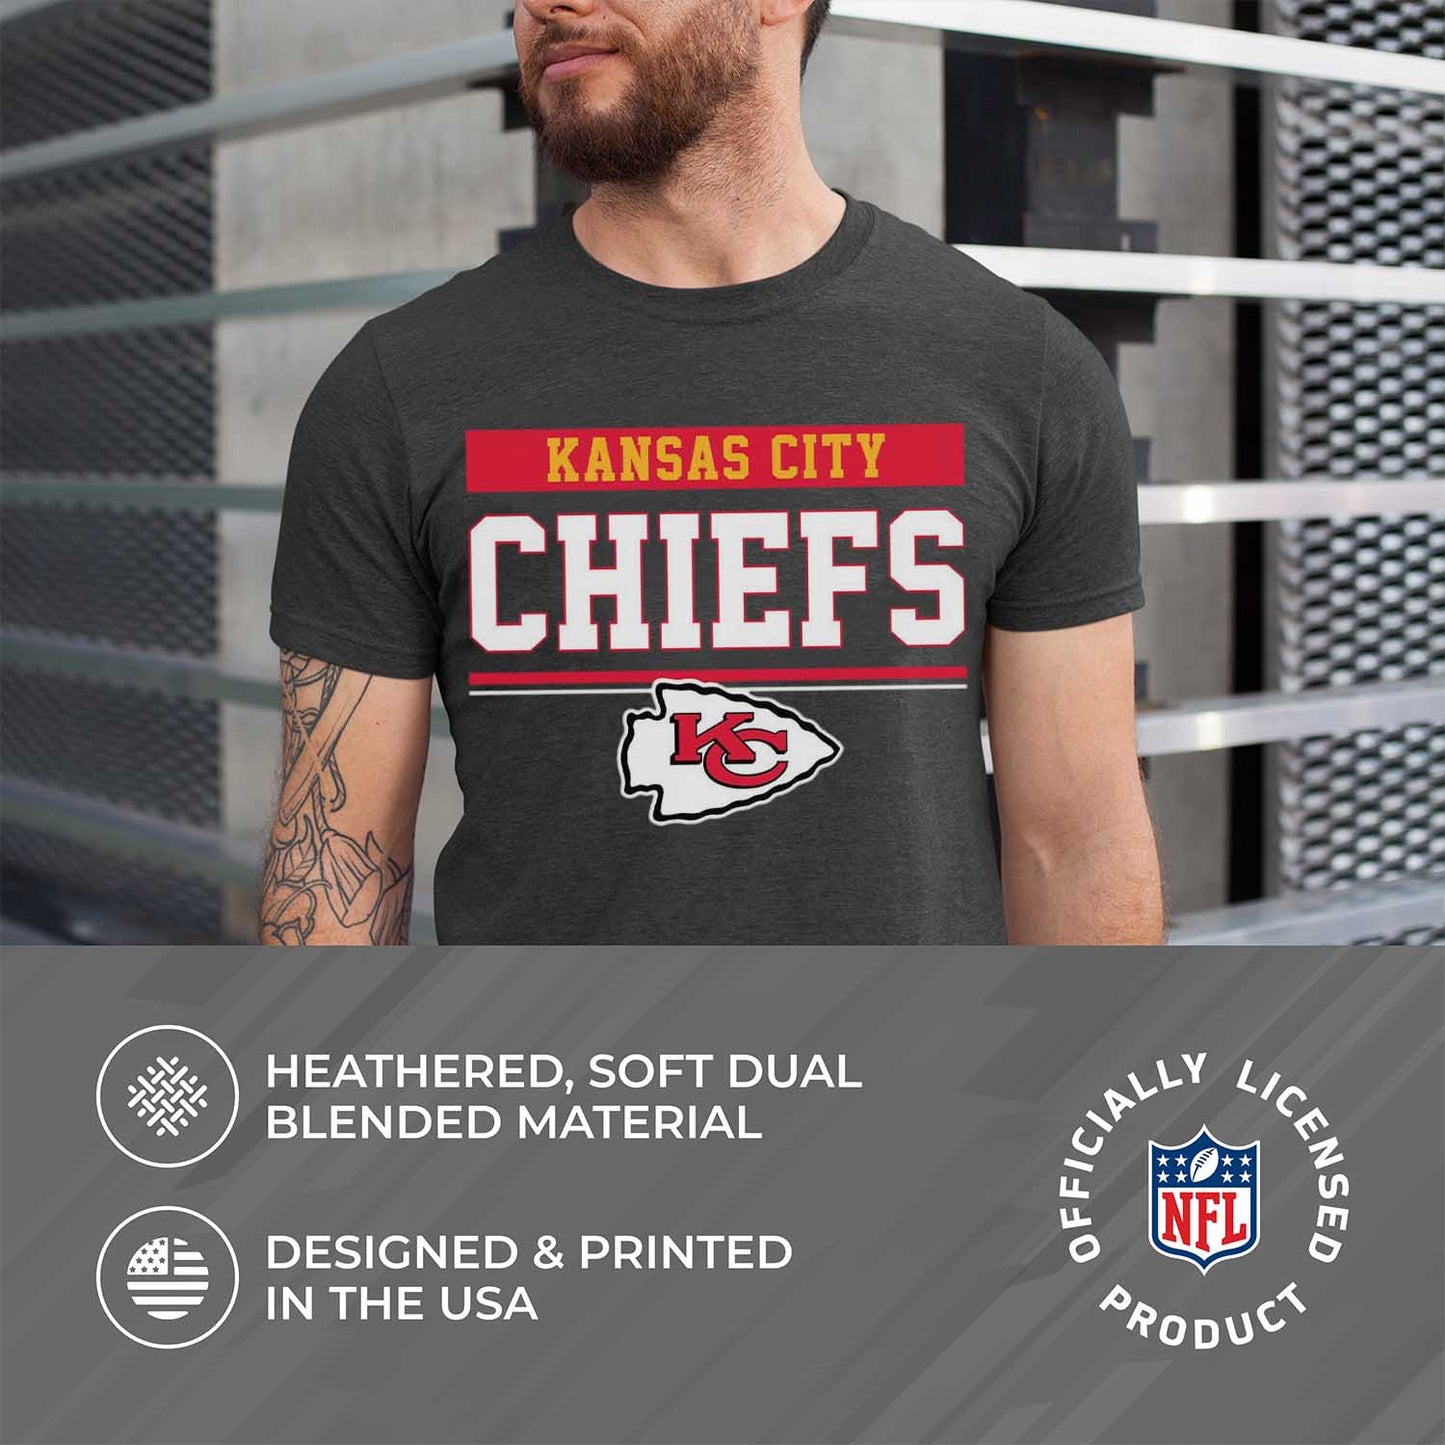 Kansas City Chiefs NFL Adult Team Block Tagless T-Shirt - Charcoal